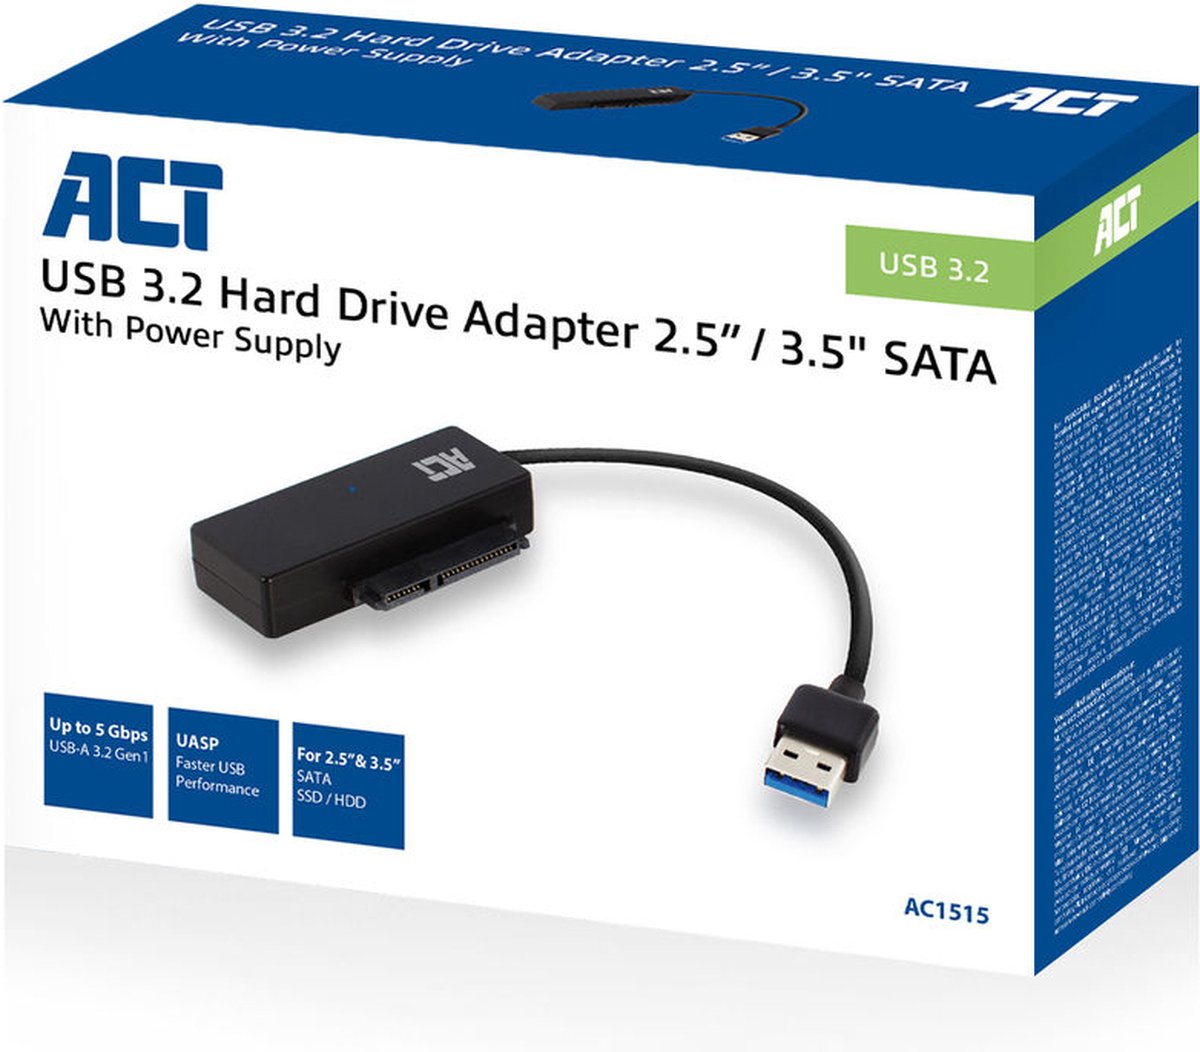 Act ac1515 USB 3.1 TO 3.5" SATA ADAPTER